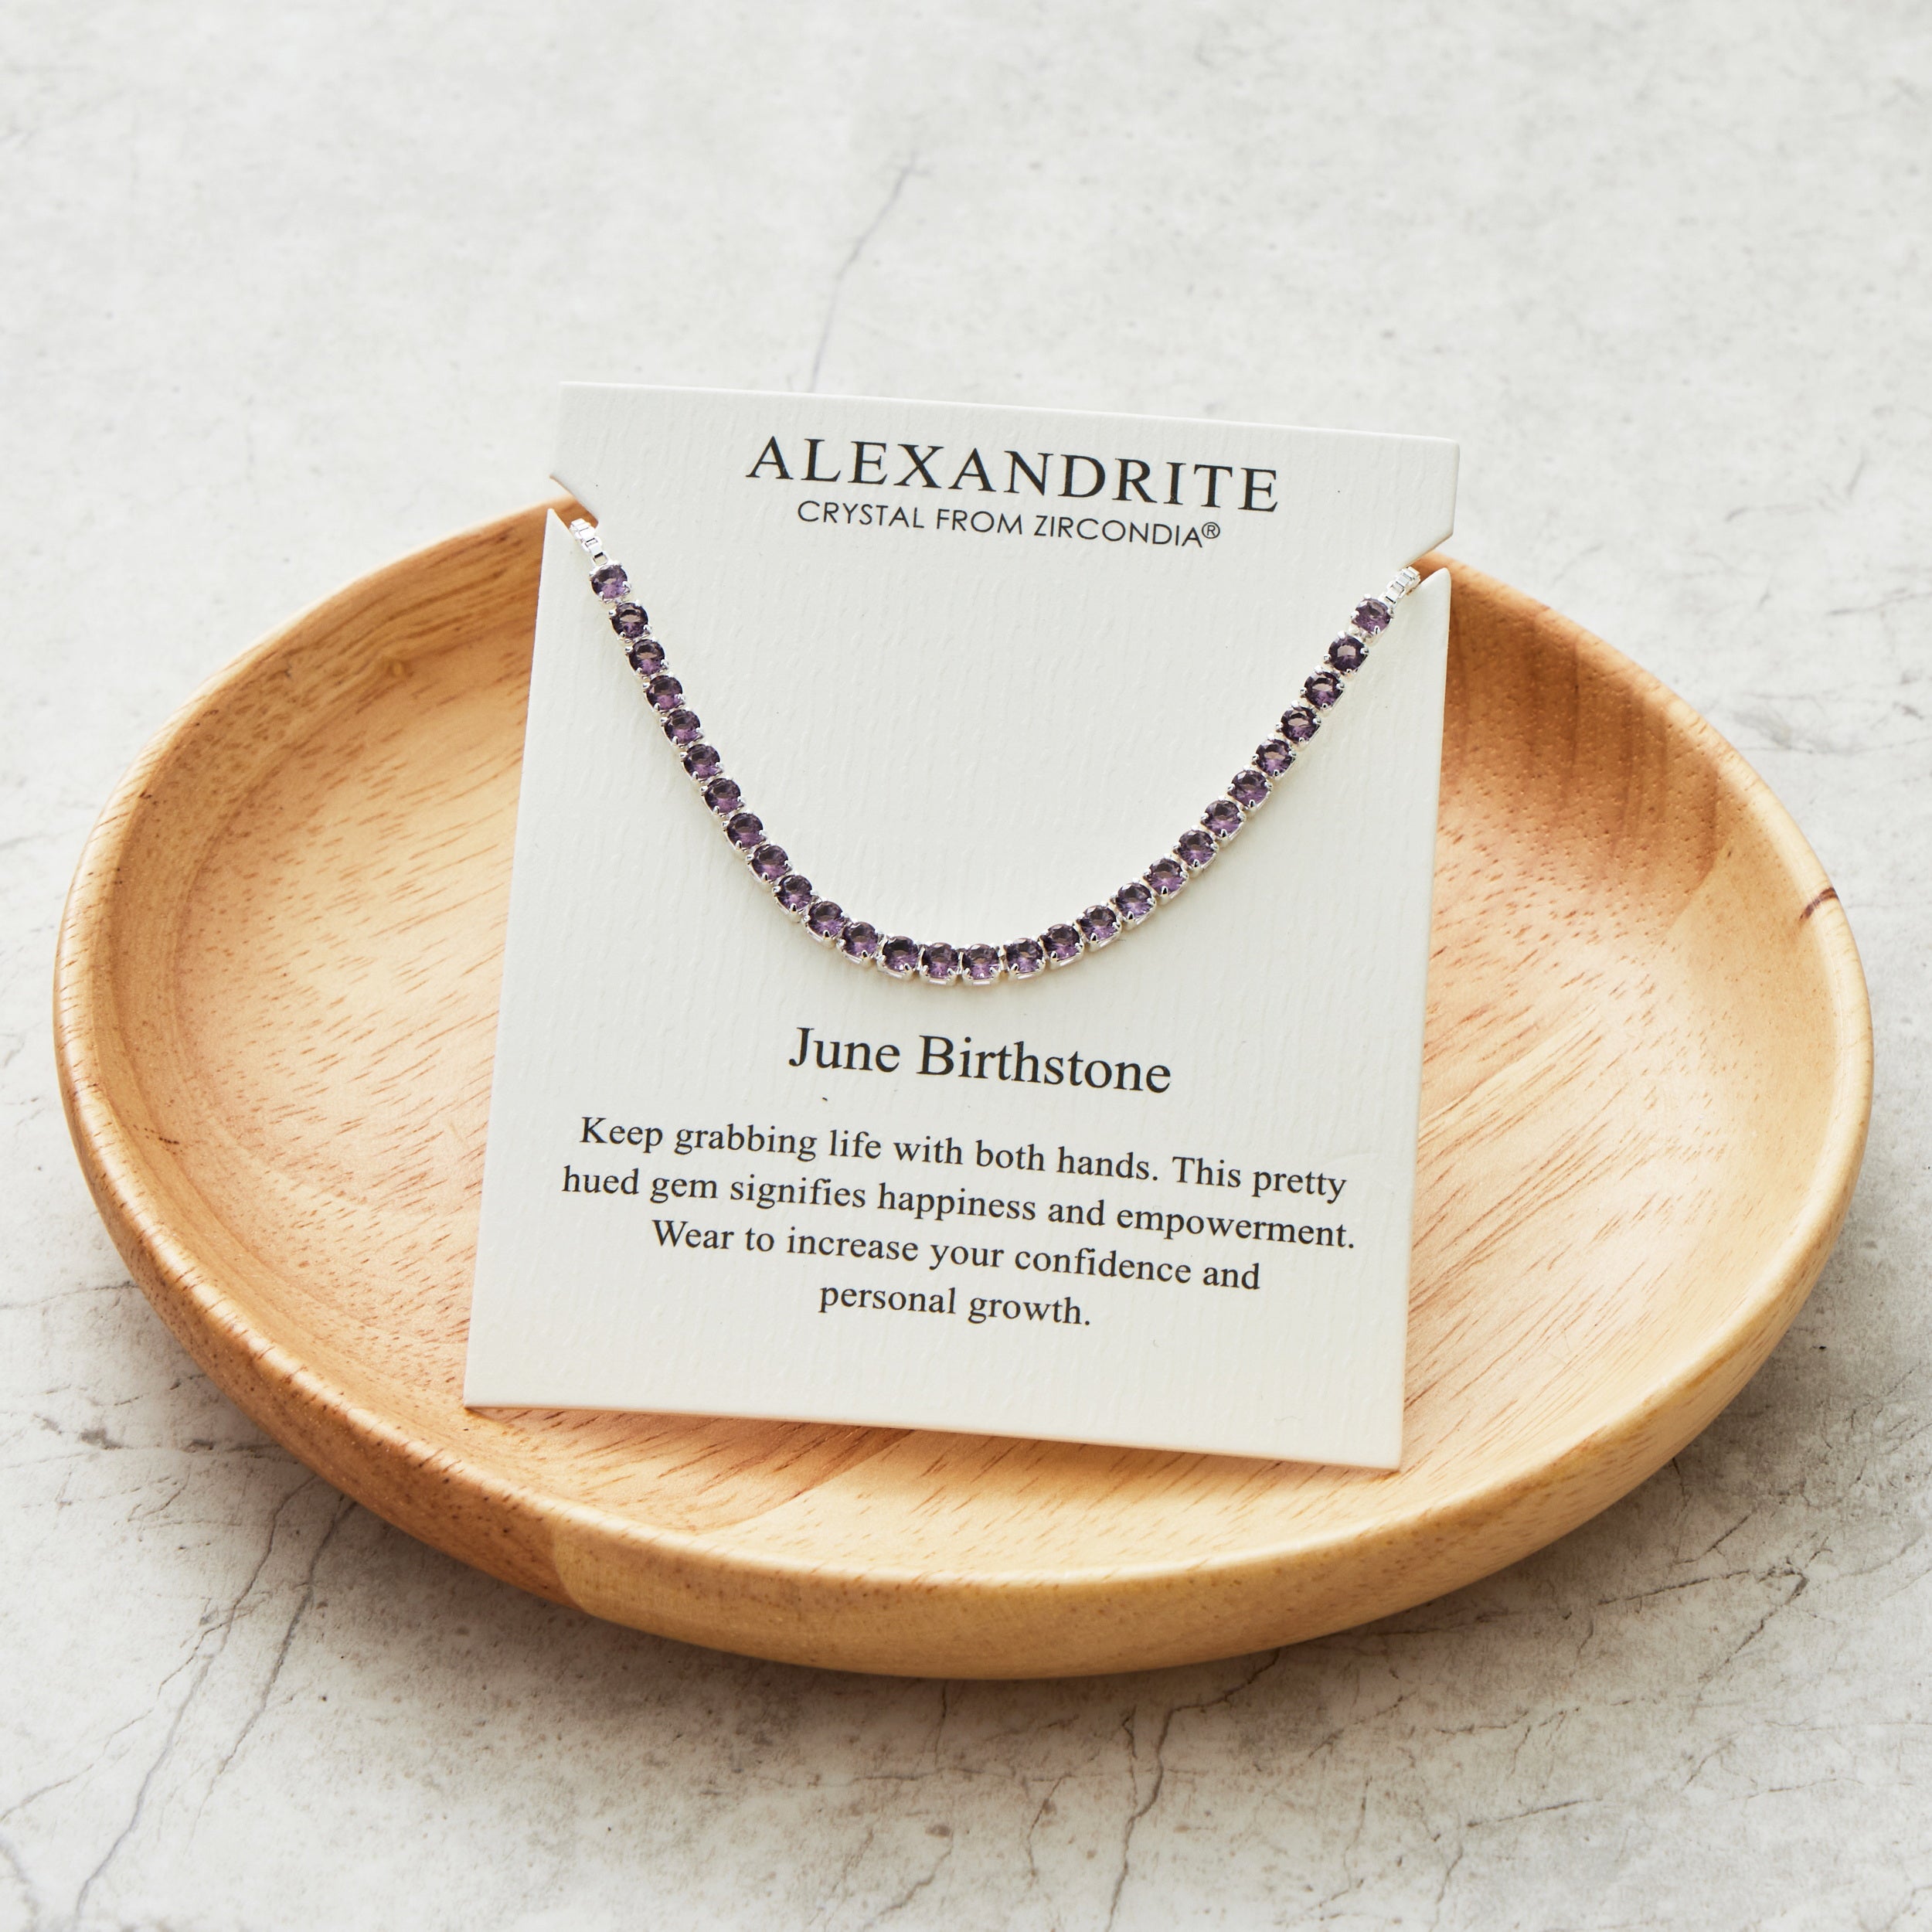 June Birthstone Friendship Bracelet with Alexandrite Zircondia® Crystals